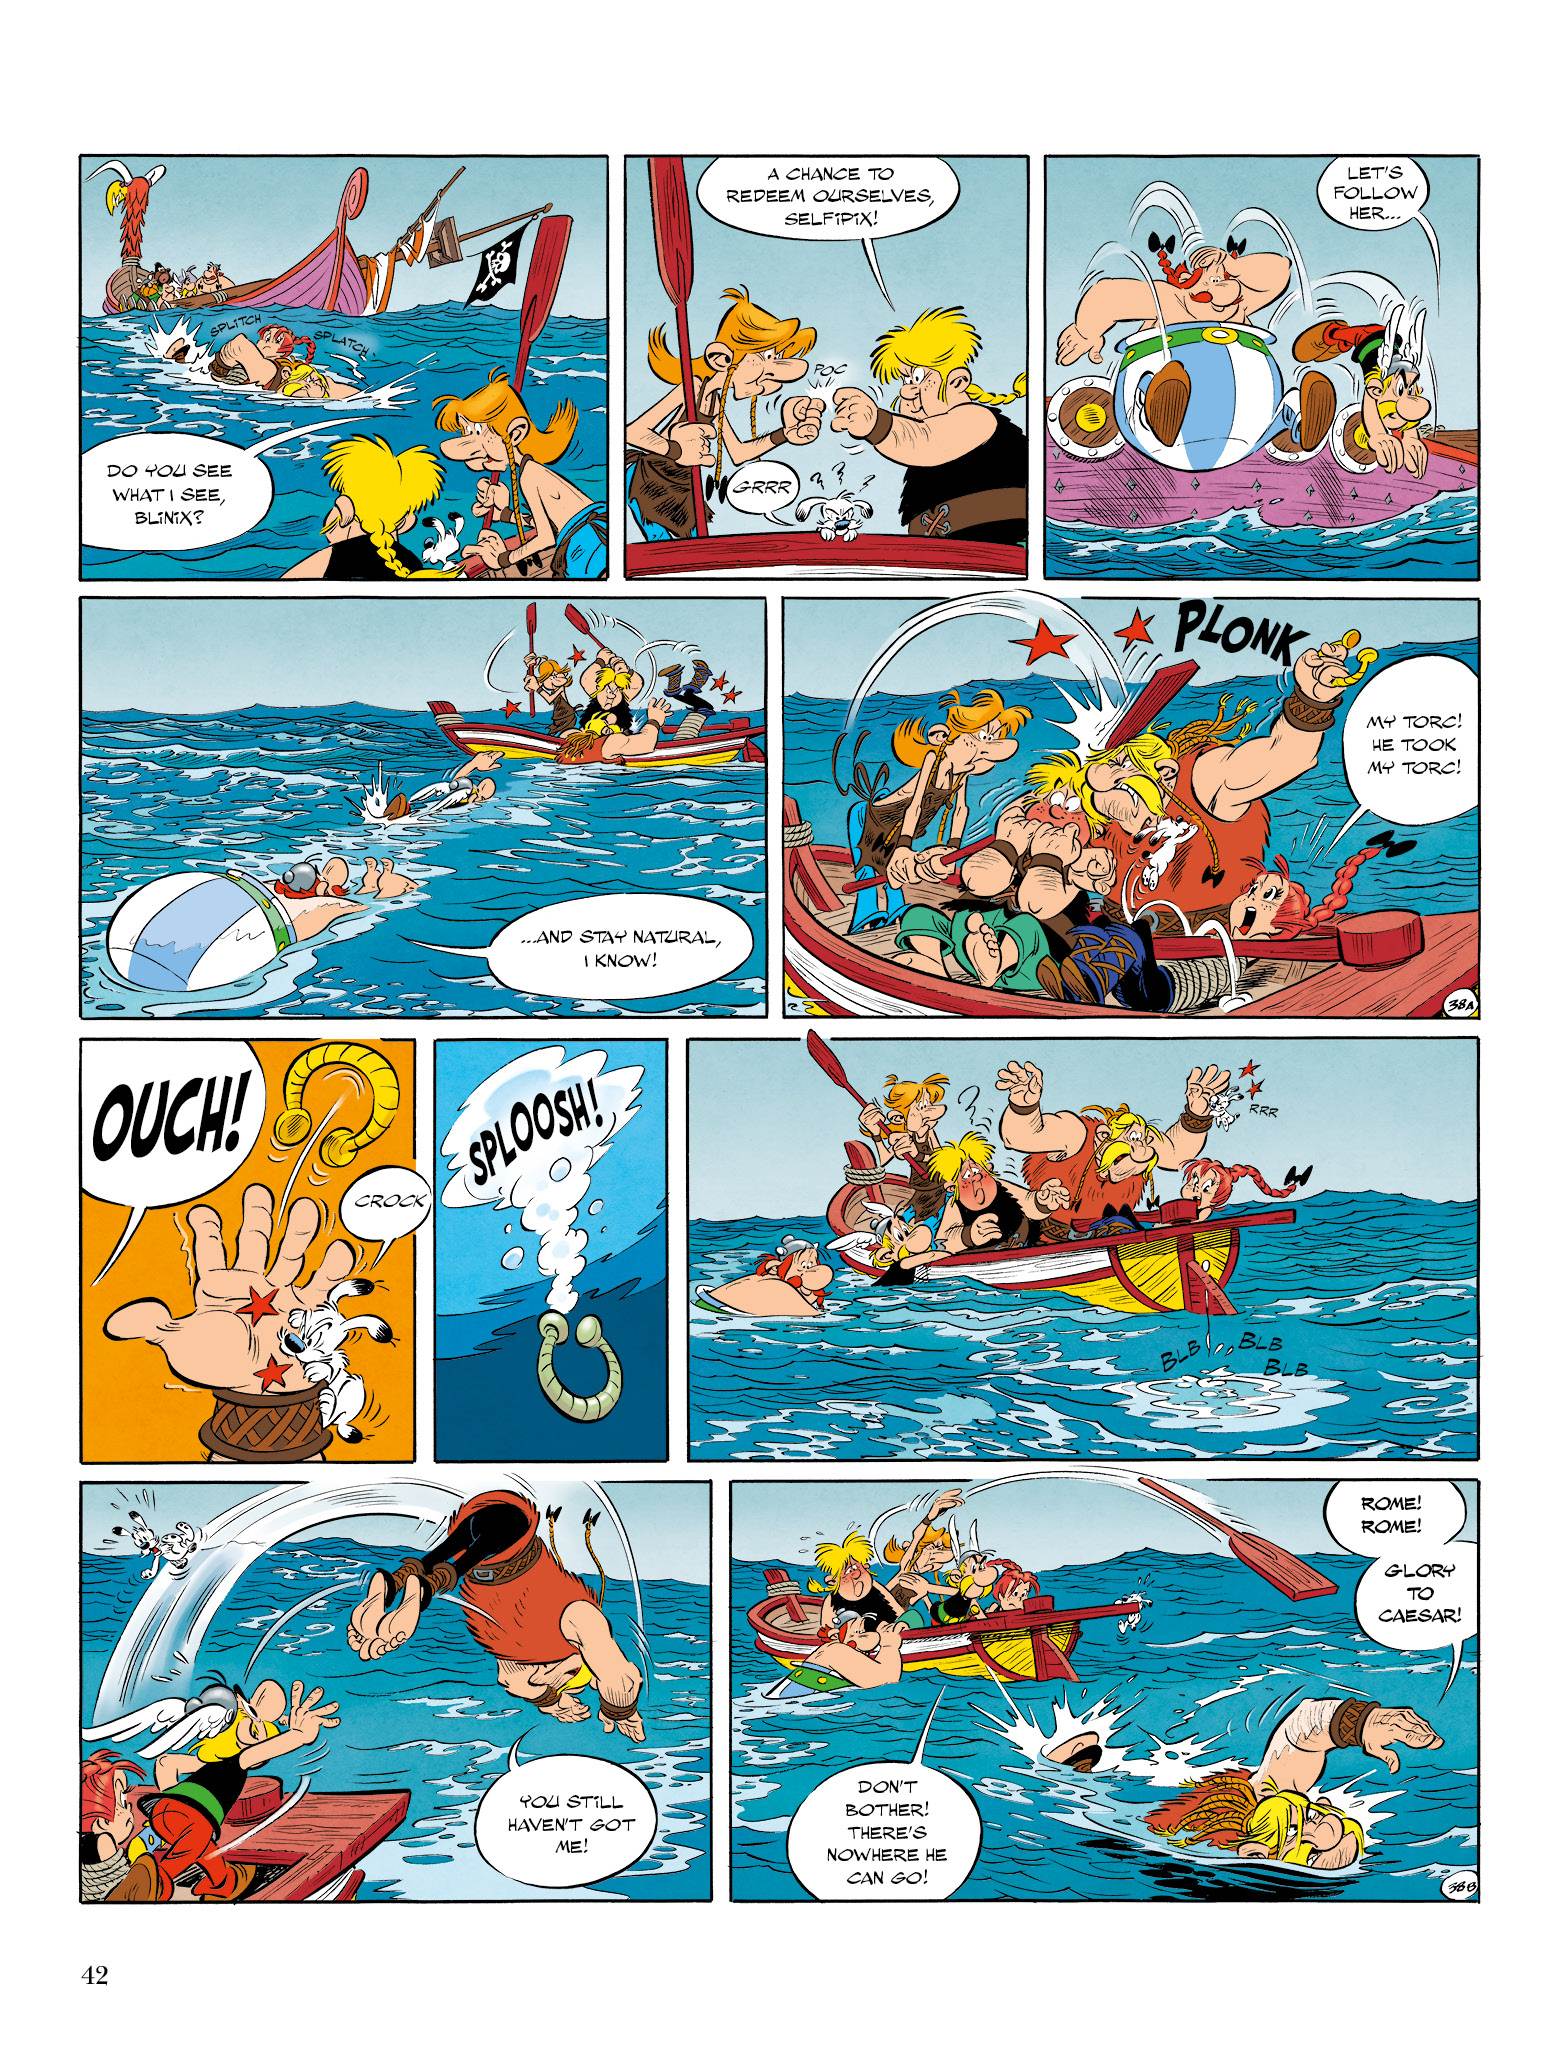 38 Asterix & Obelix Nr 1-38 komplett Top Comic Sammlung 1 x Gratisbeilage 